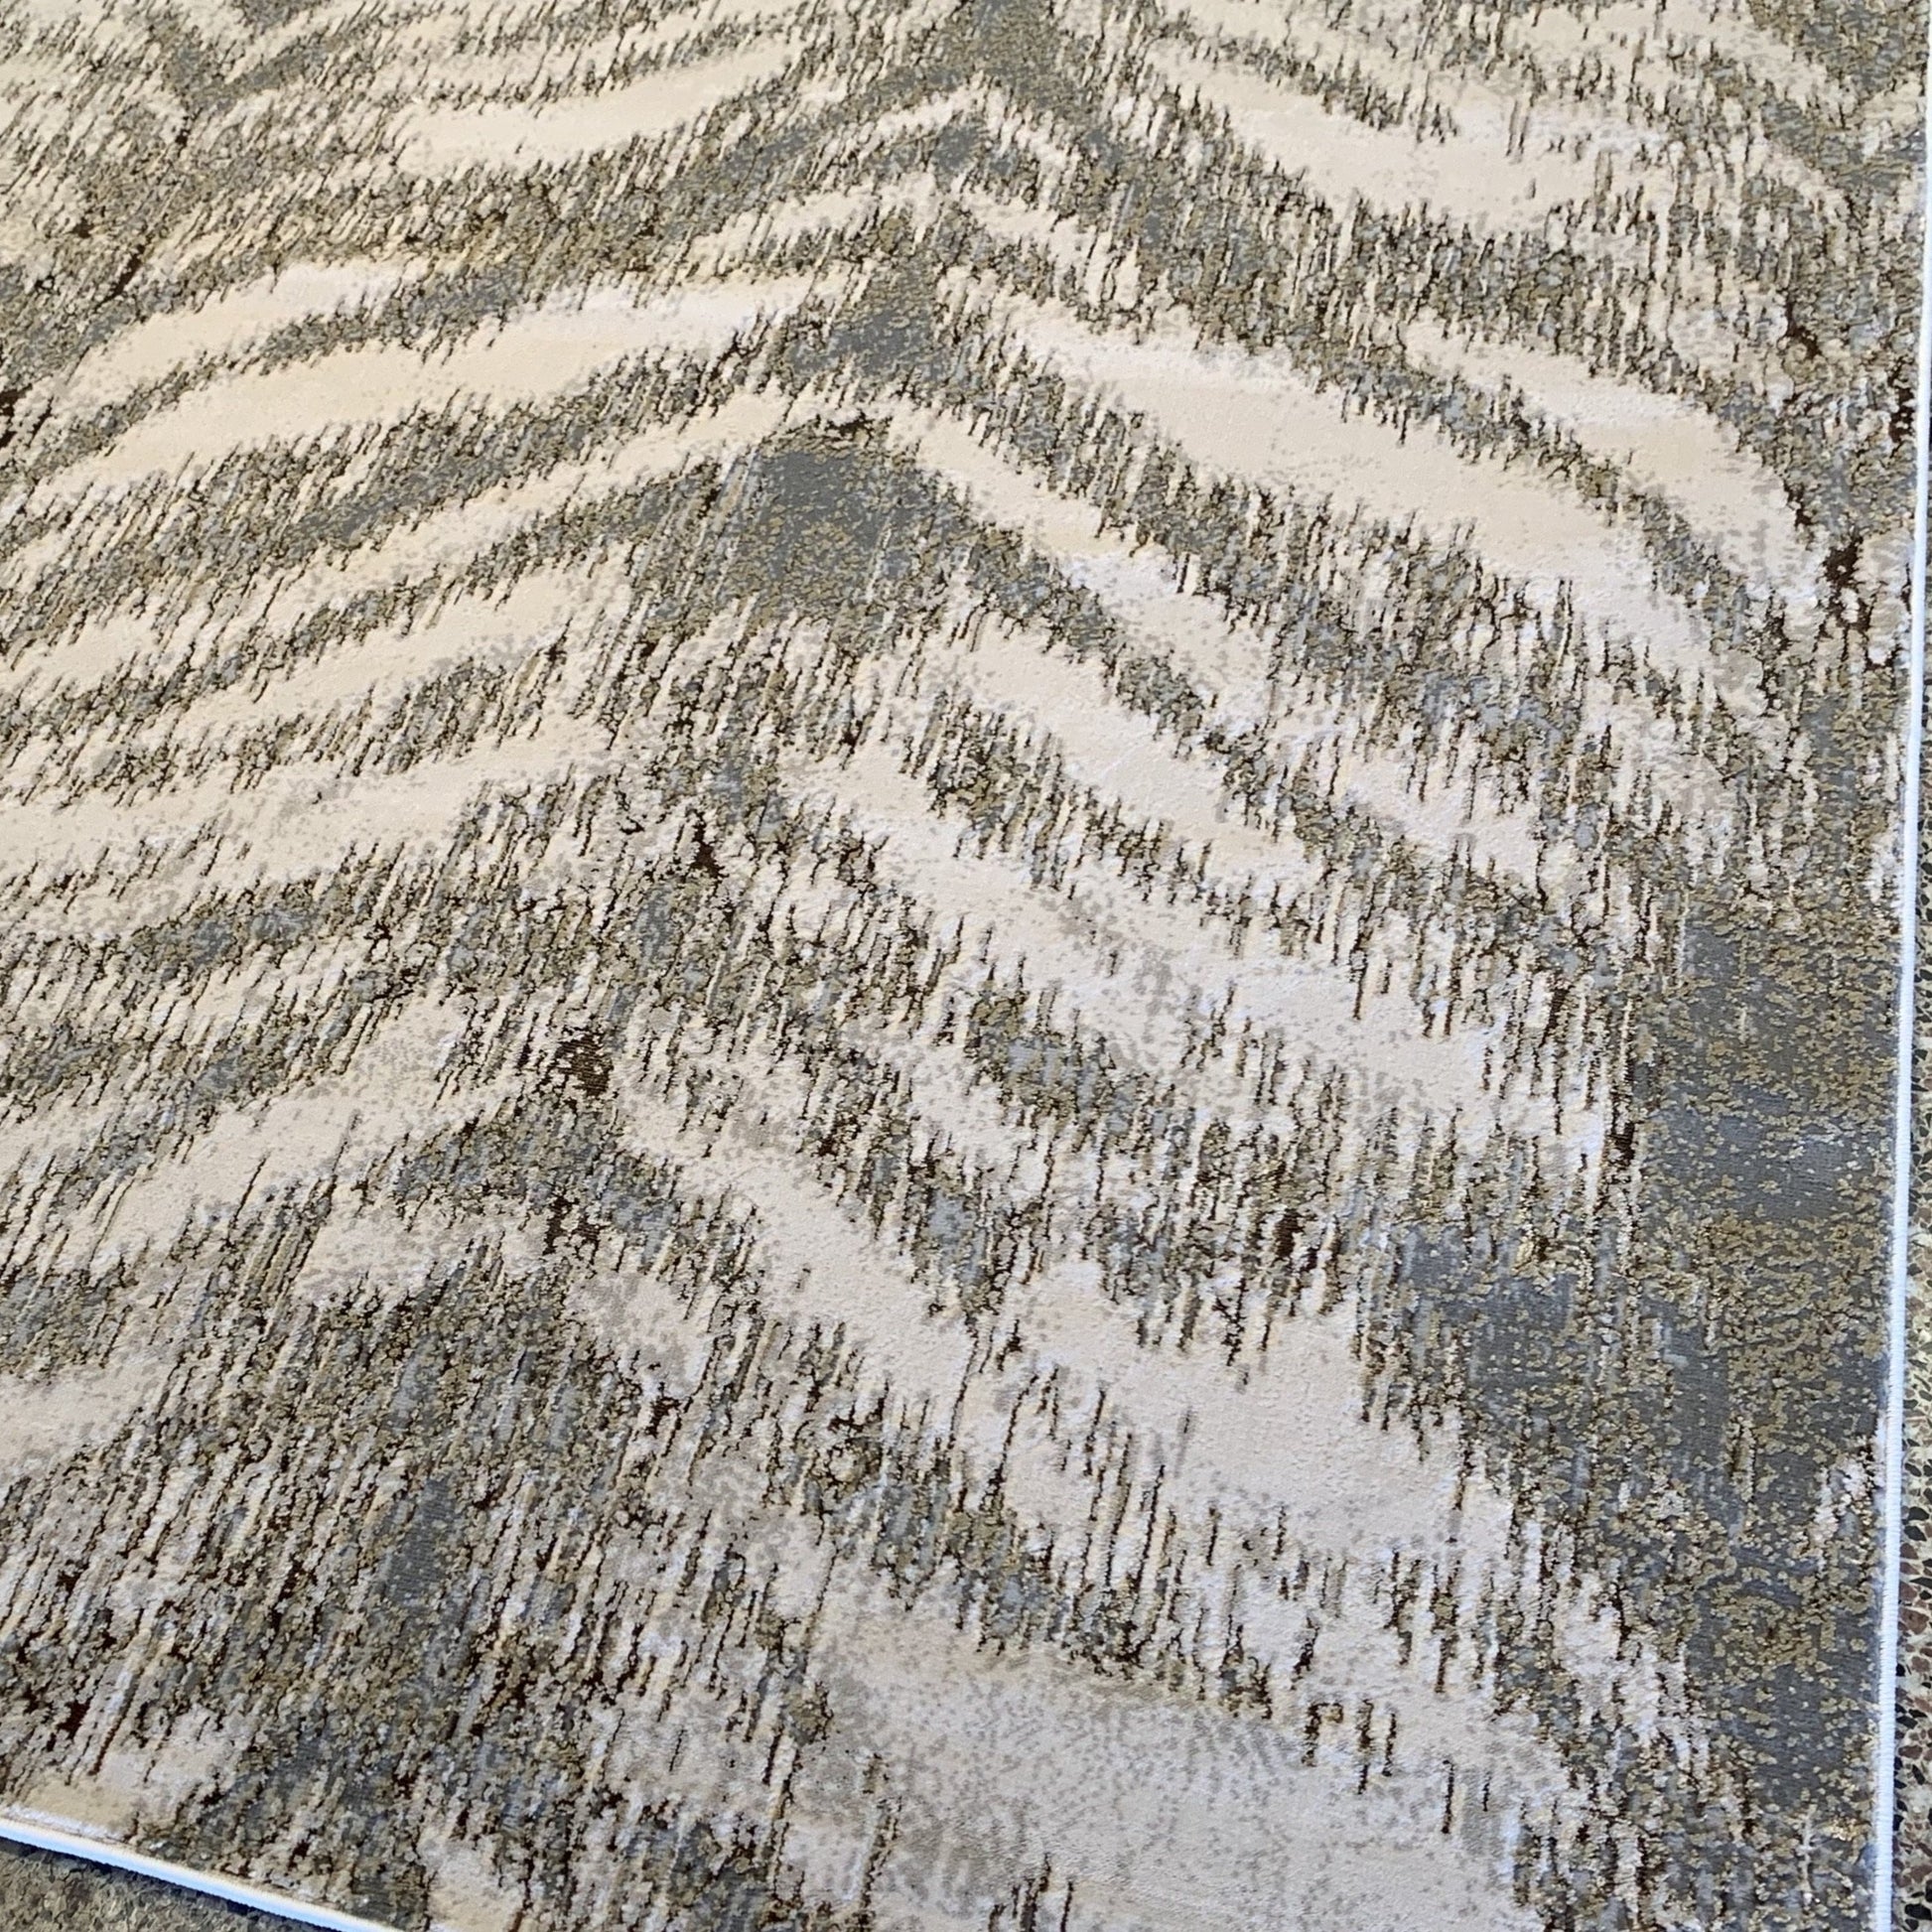 Silver Shimmery Changing Safari Zebra Animal Print Ultra Soft Cozy Area Rug/Carpet